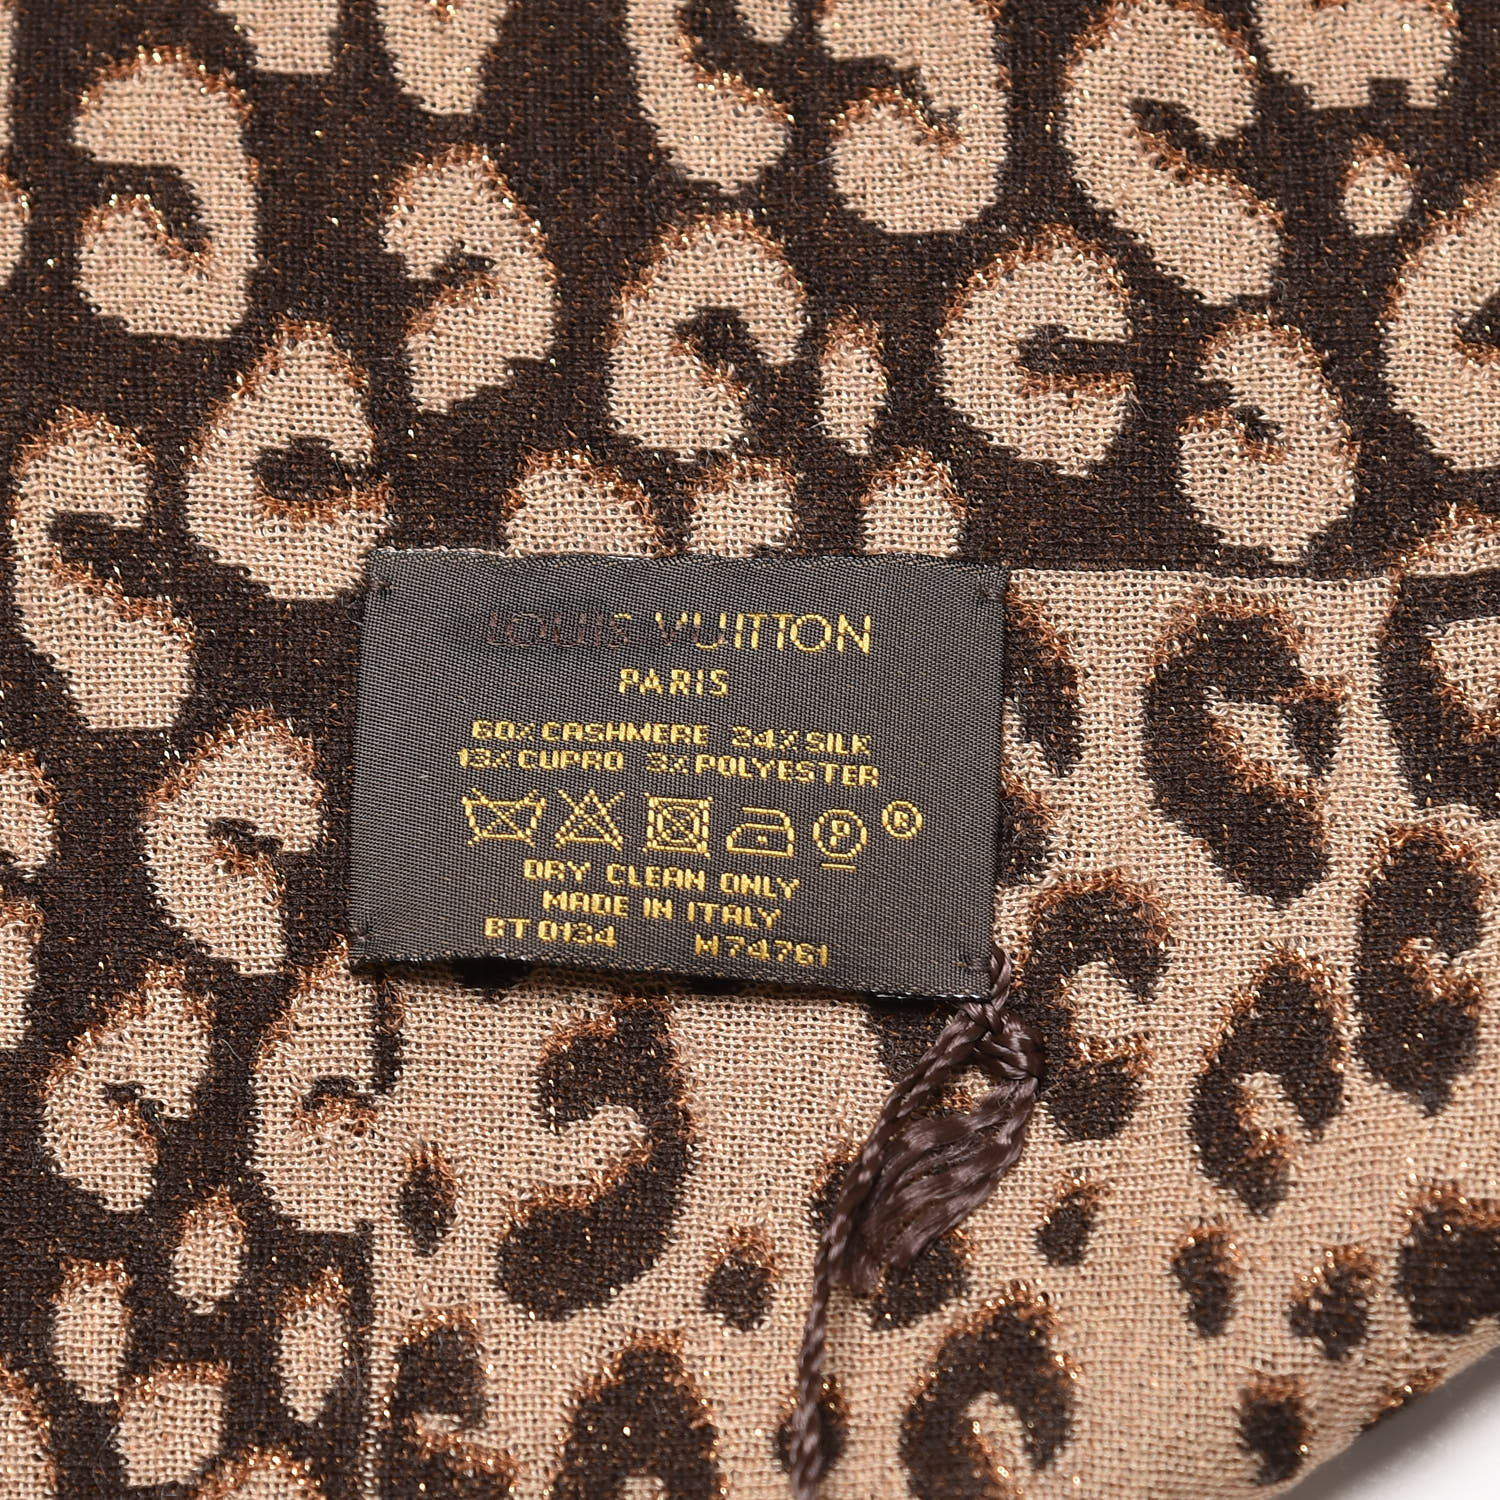 Louis Vuitton Multicolor Leopard Printed Giant V Silk Square Scarf